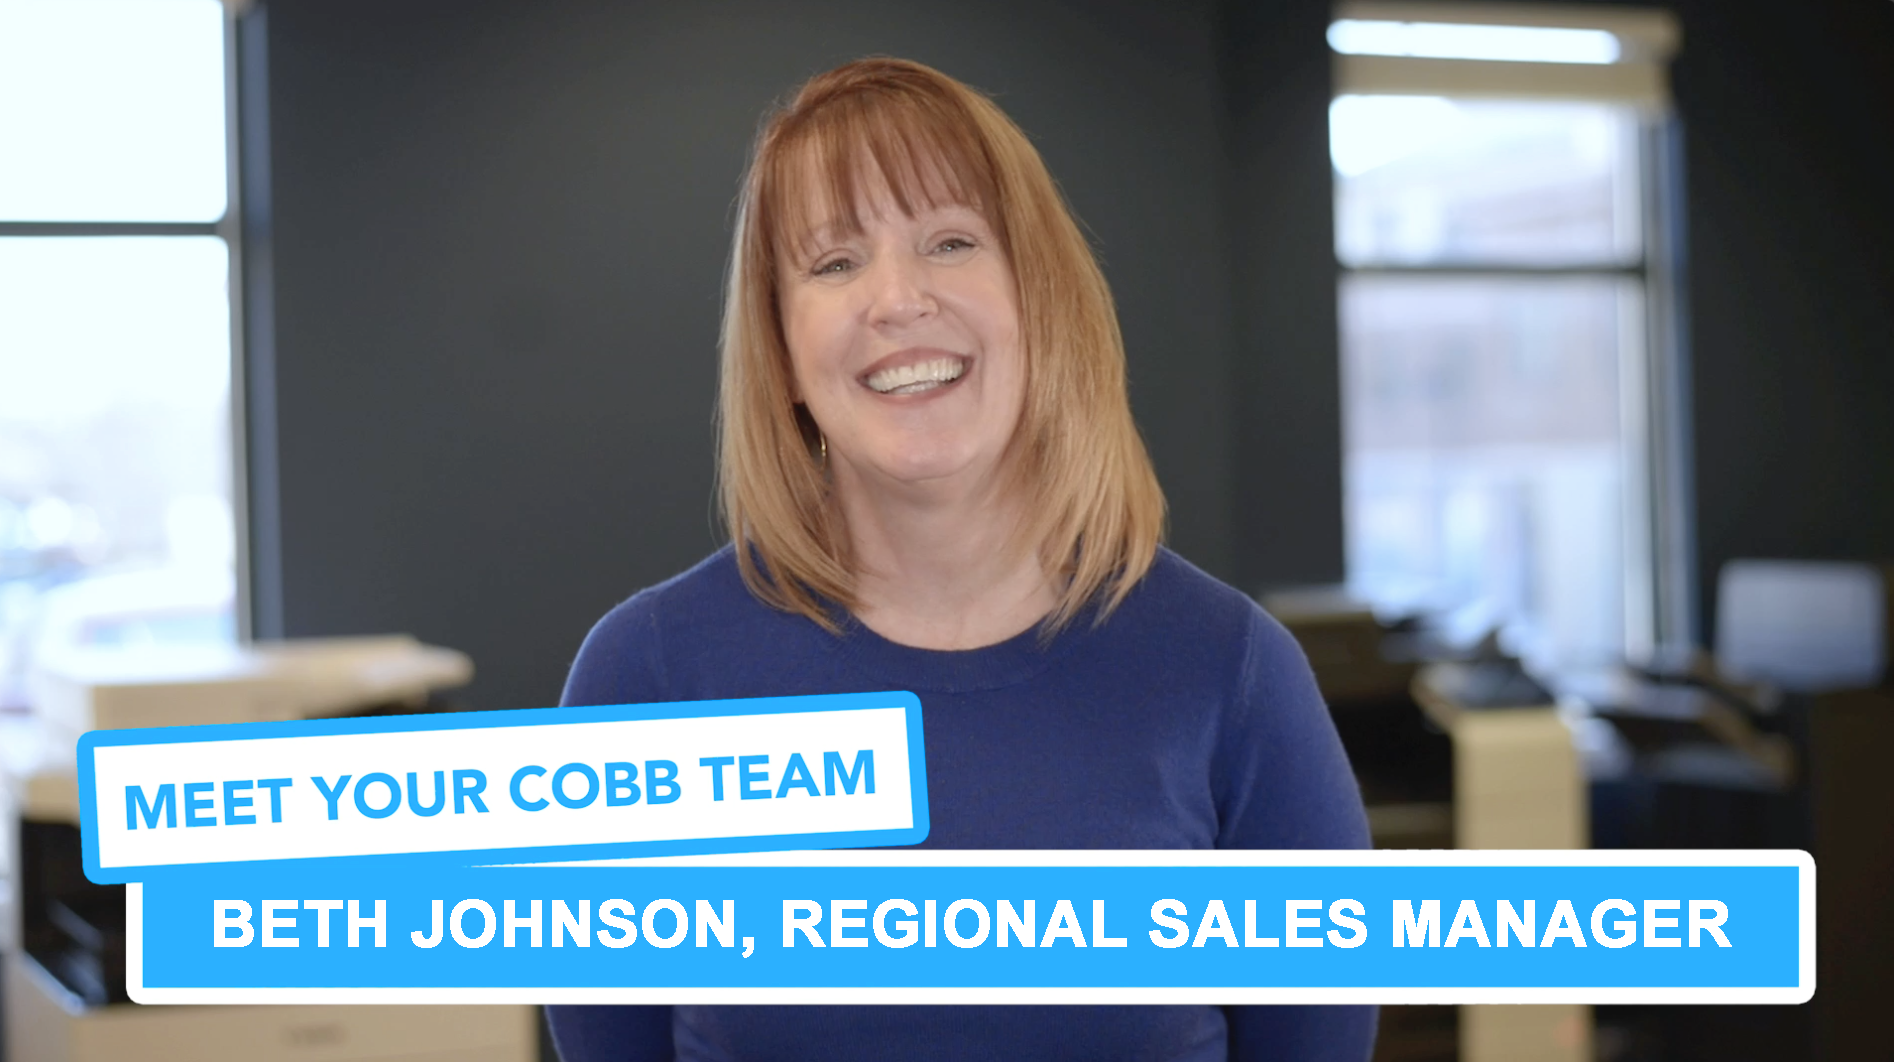 Meet Your Cobb Team: Beth Johnson, Regional Sales Manager